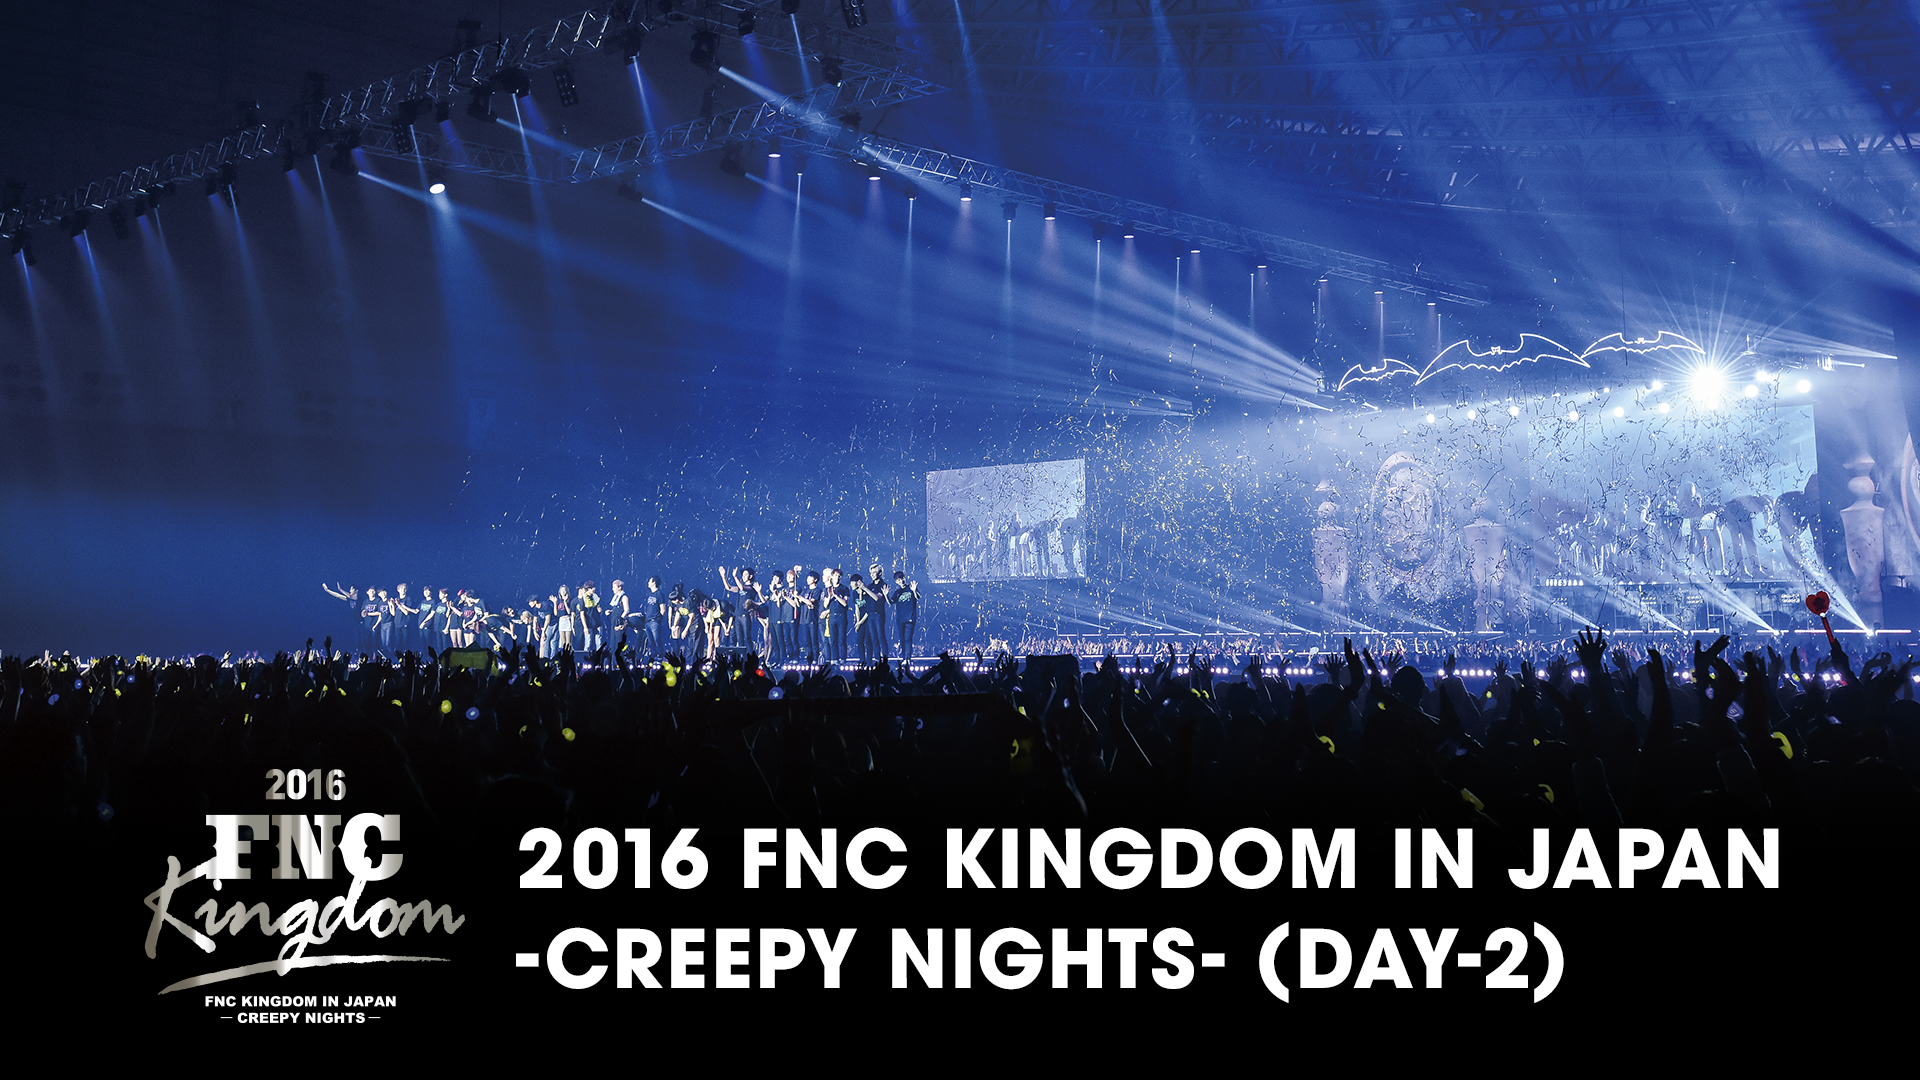 2016 FNC KINGDOM IN JAPAN -CREEPY NIGHTS- (DAY-2)(音楽・ライブ / 2016) - 動画配信 |  U-NEXT 31日間無料トライアル